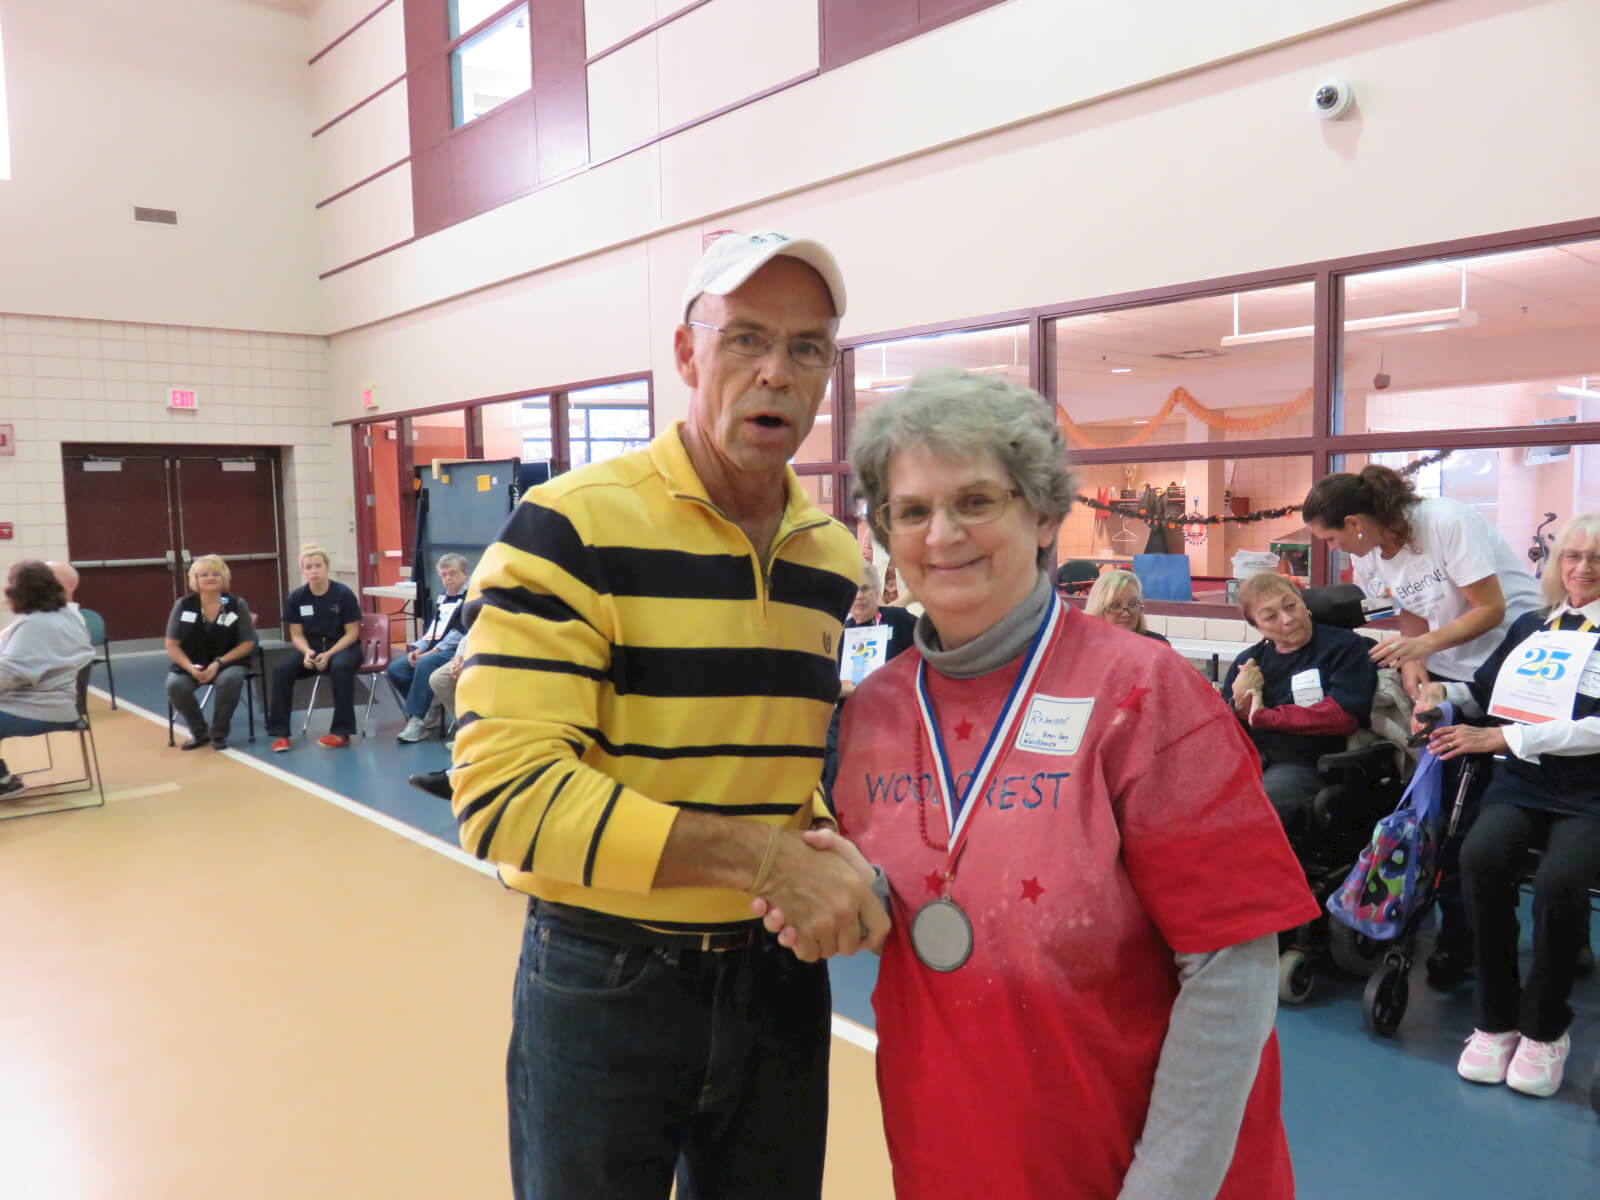 Rosanne Bourne receives a medal from DePaul’s Recreation Supervisor Dan Charcholla